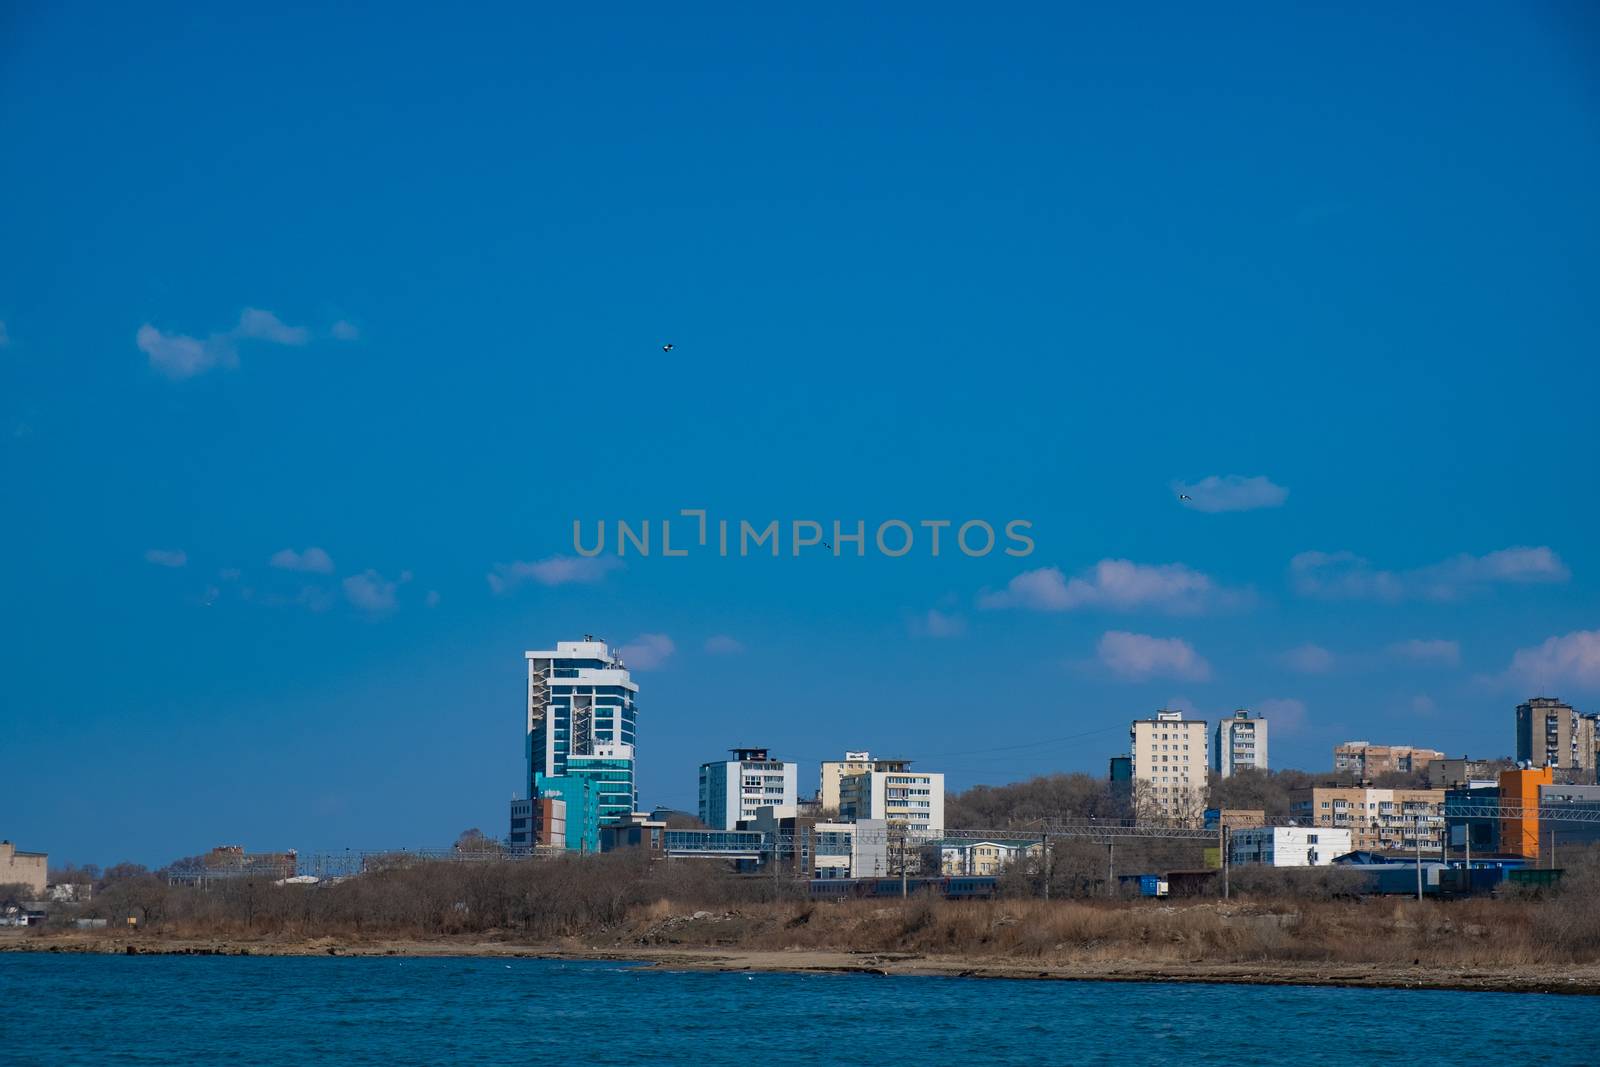 Vladivostok city view from the sea by rdv27